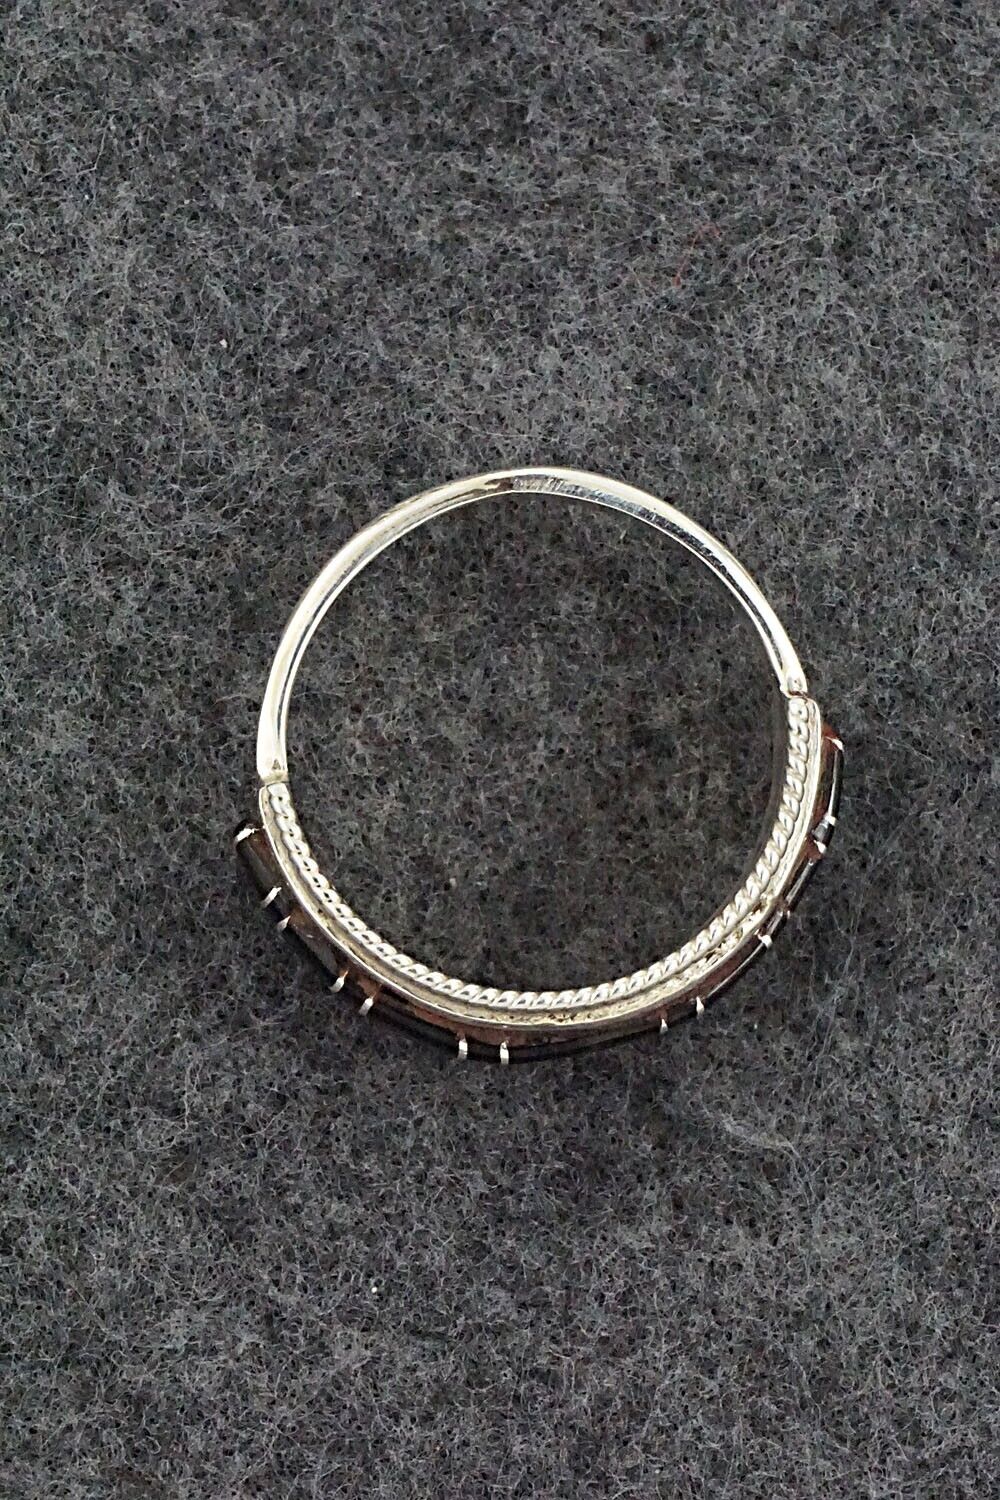 Onyx & Sterling Silver Ring - Deirdre Luna Panteah - Size 14